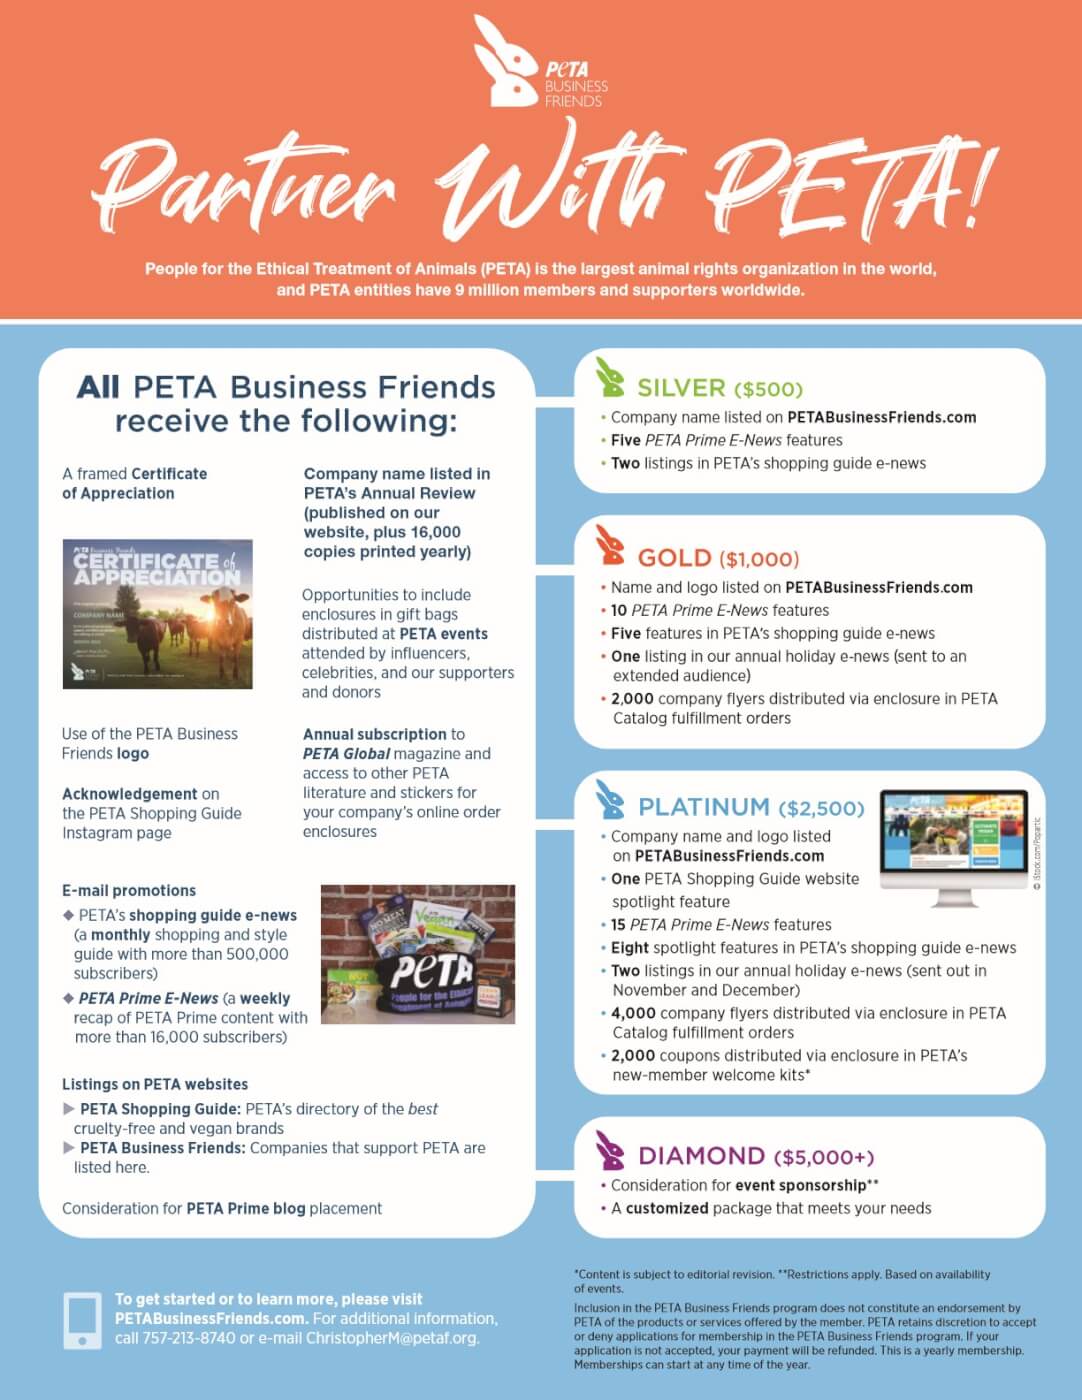 PETA Business Friends page